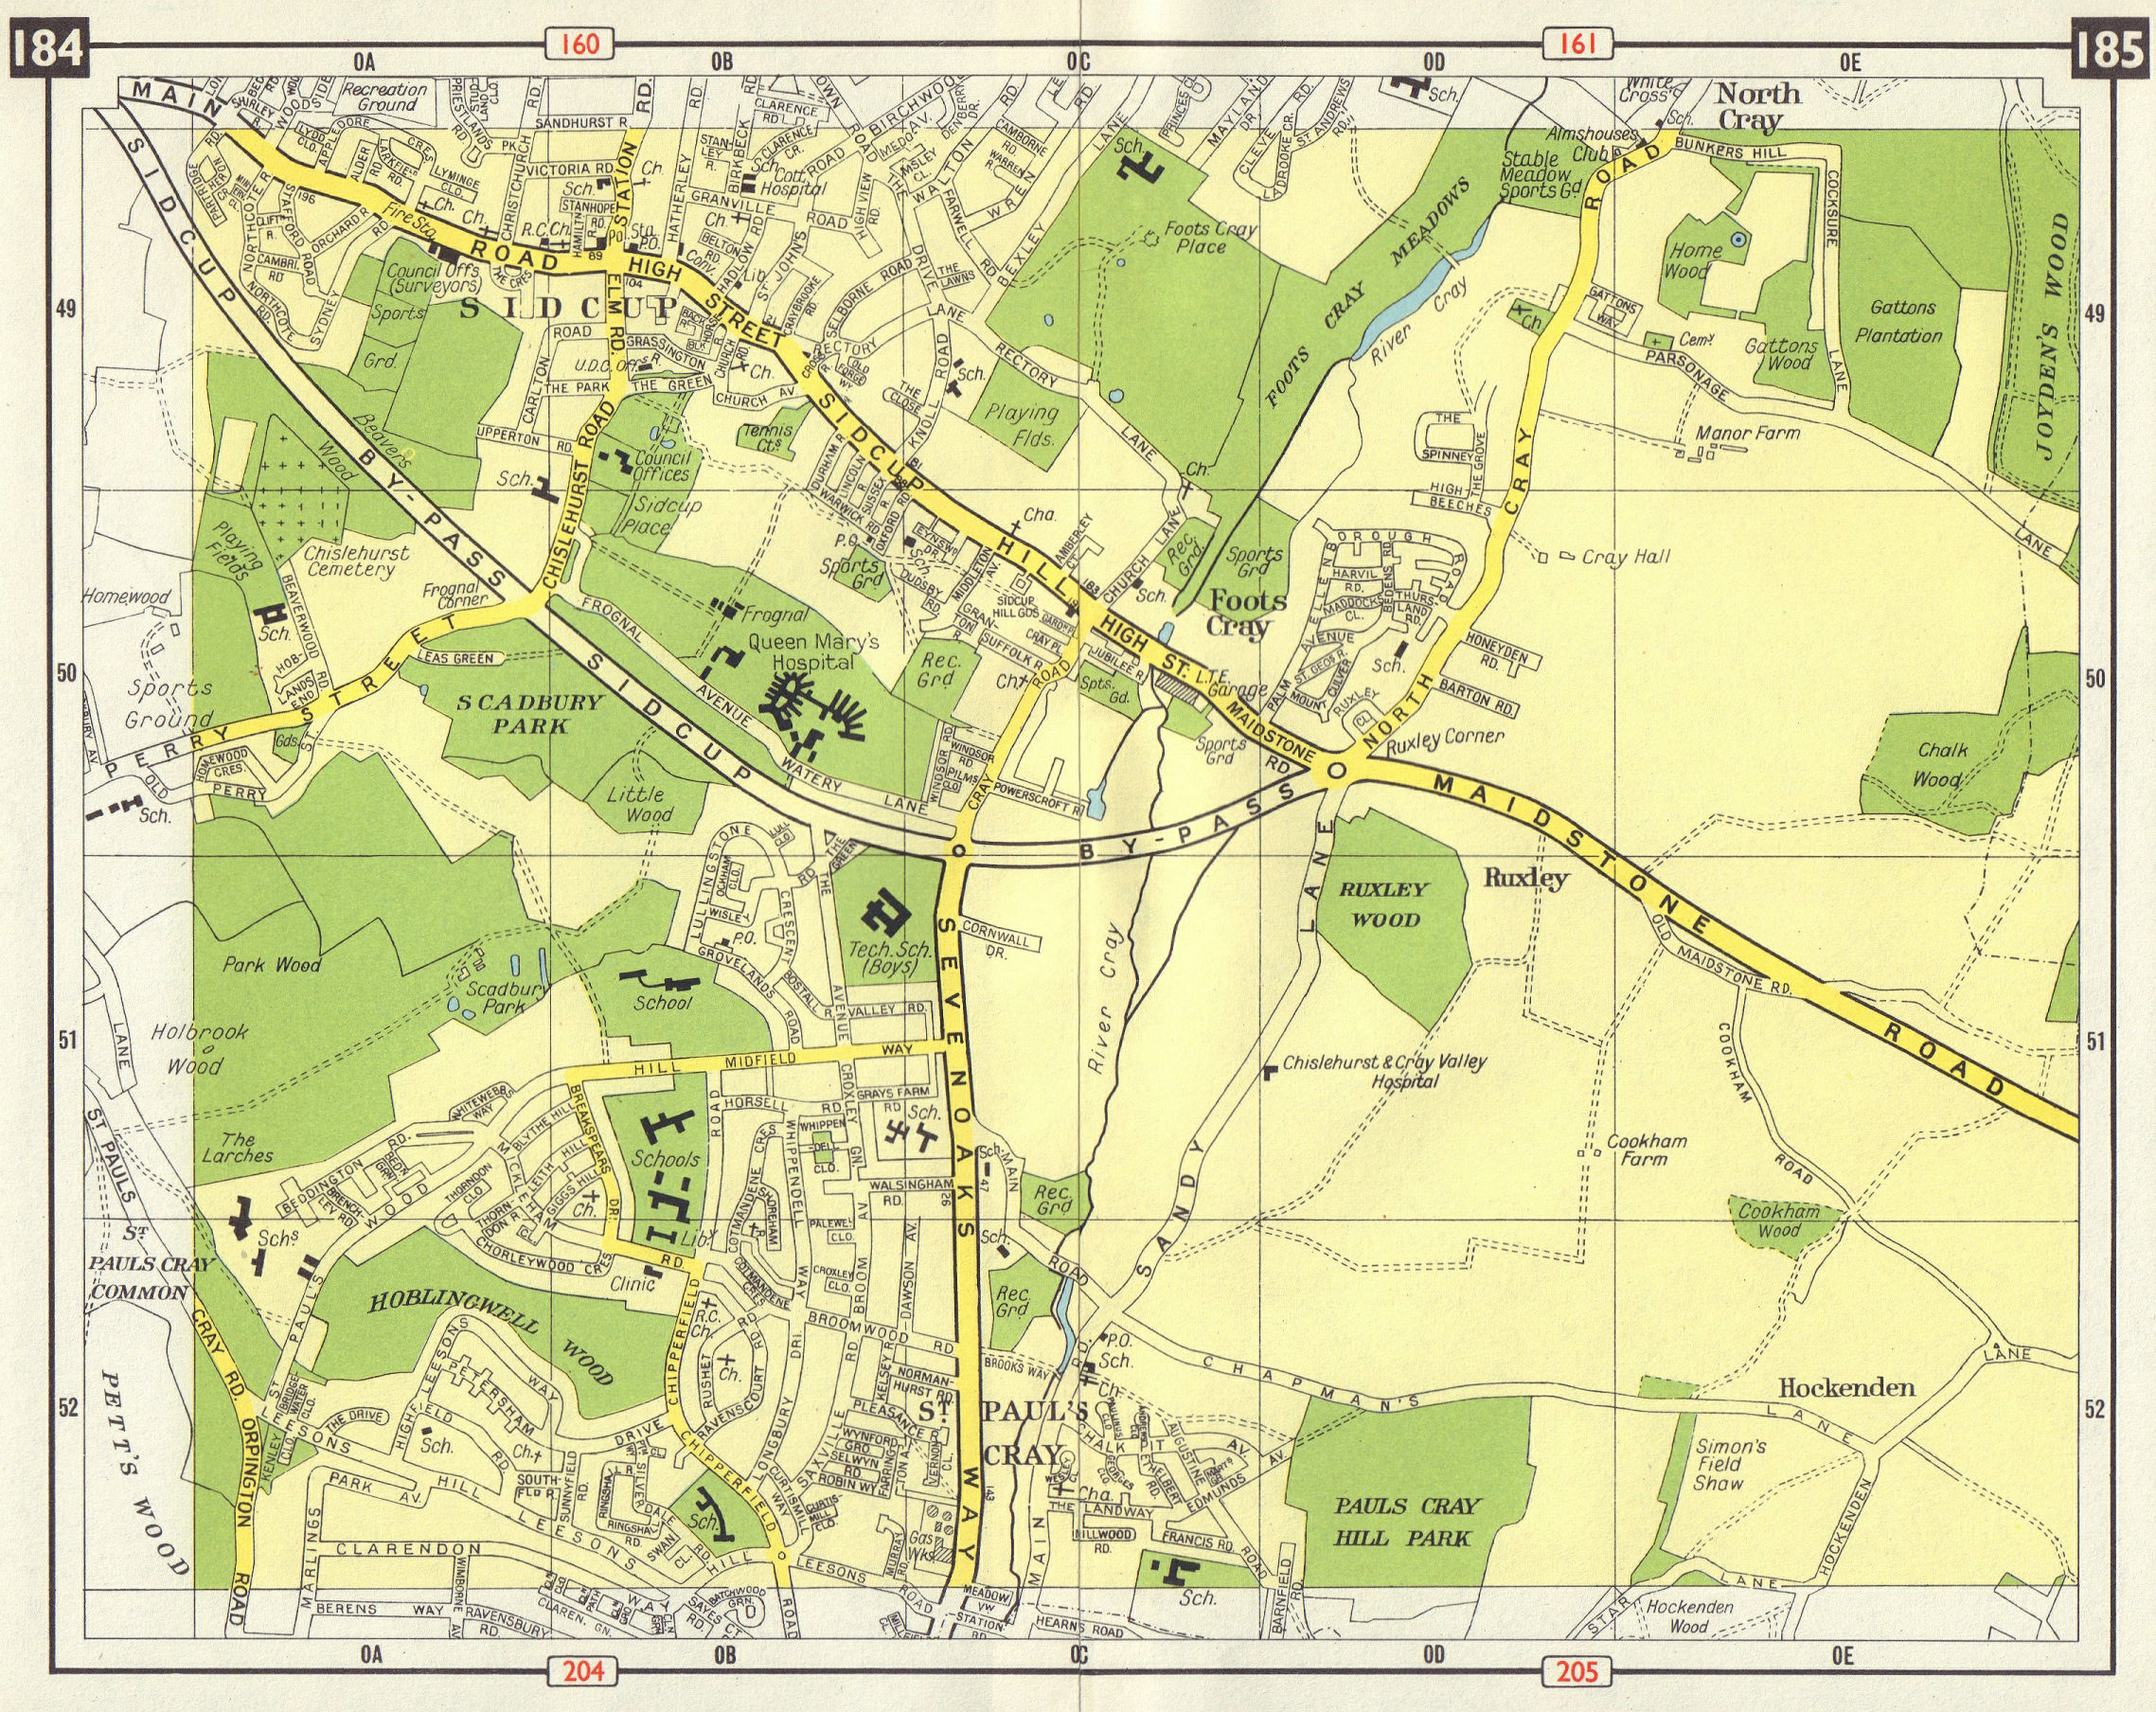 SE LONDON Sidcup Foots Cray Ruxley St Paul's Cray North Cray Hockenden 1965 map